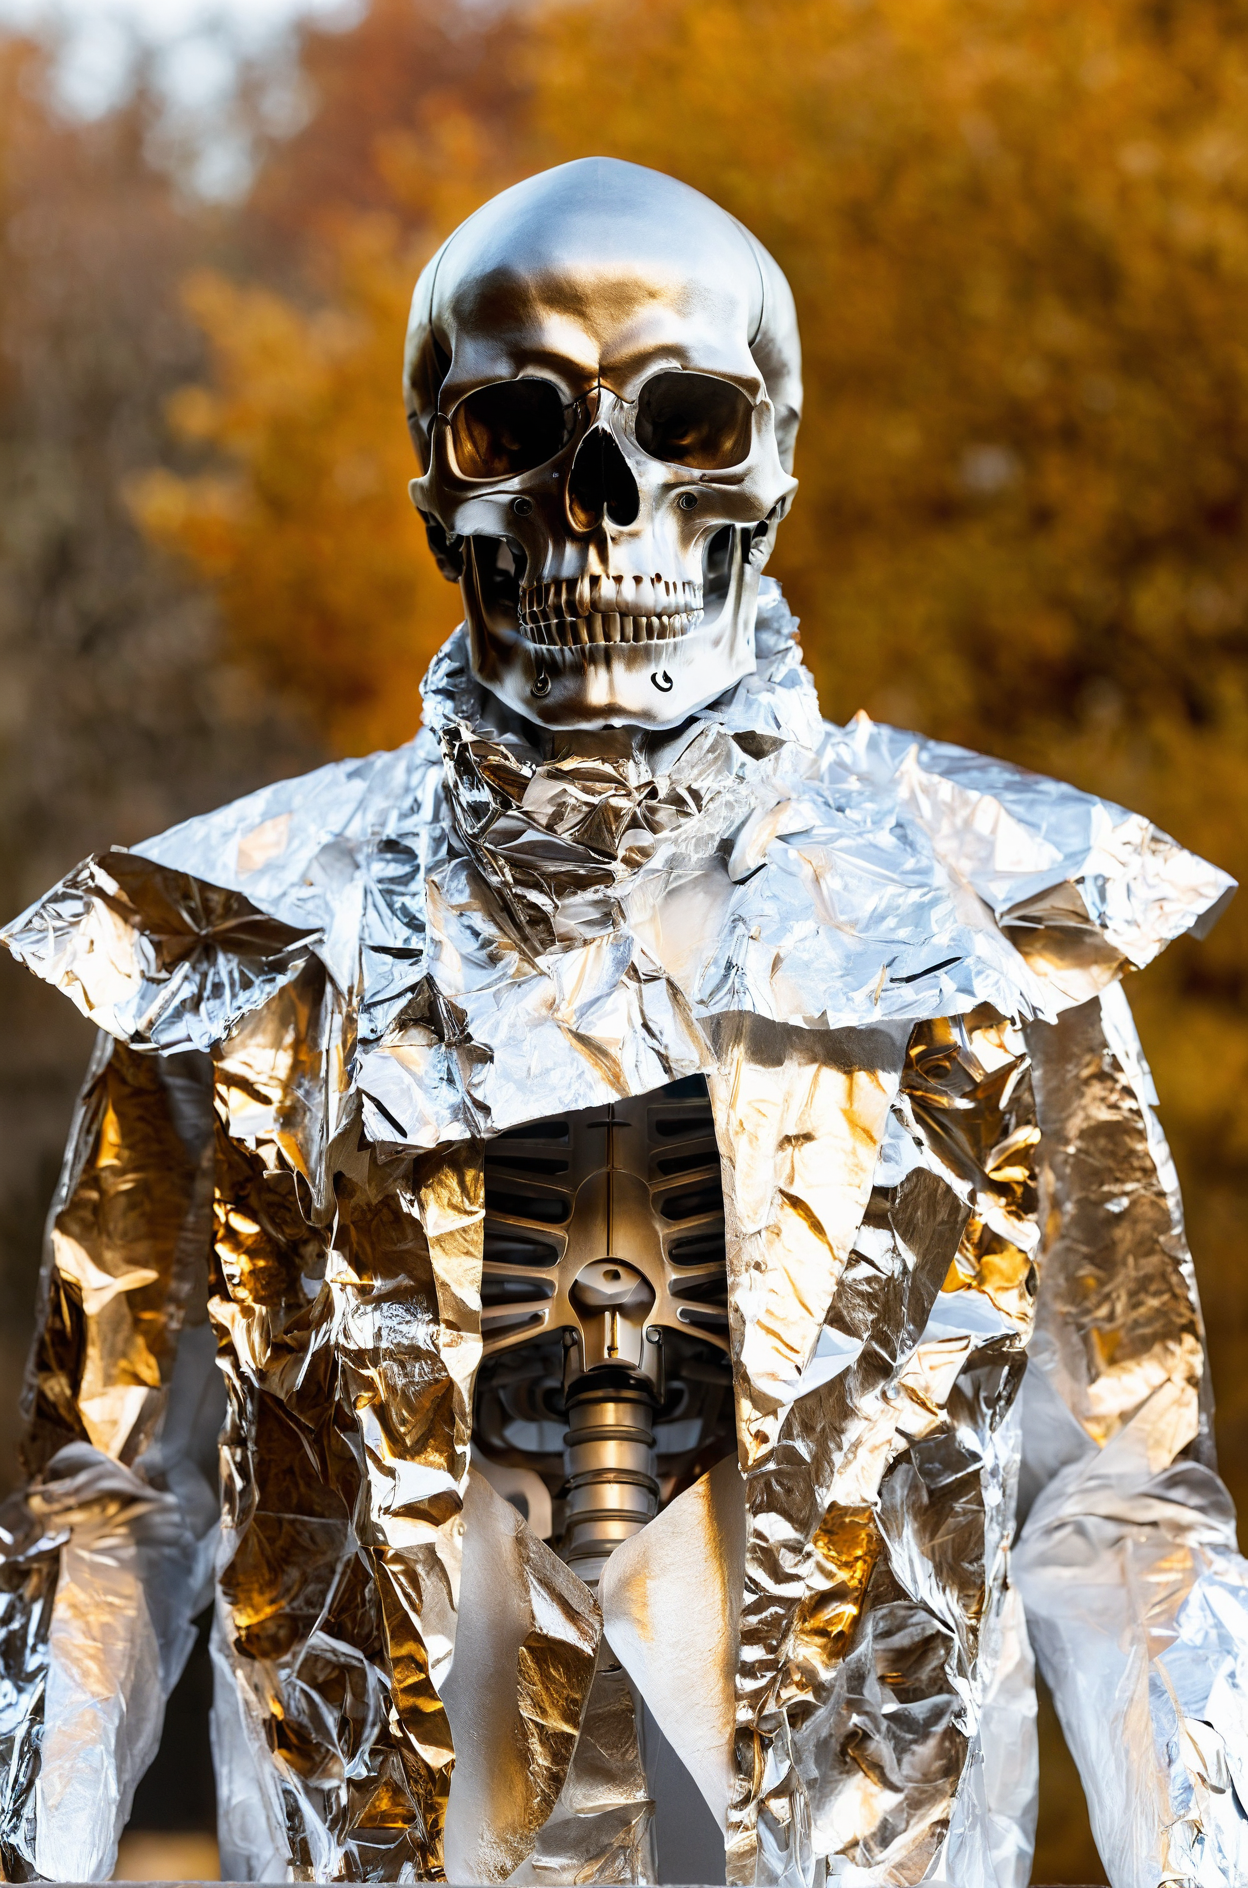 autumn palette,skull,refined accessories,exterior shot,warm tones,half body covered in crinkled aluminum foil,humanoid mac...